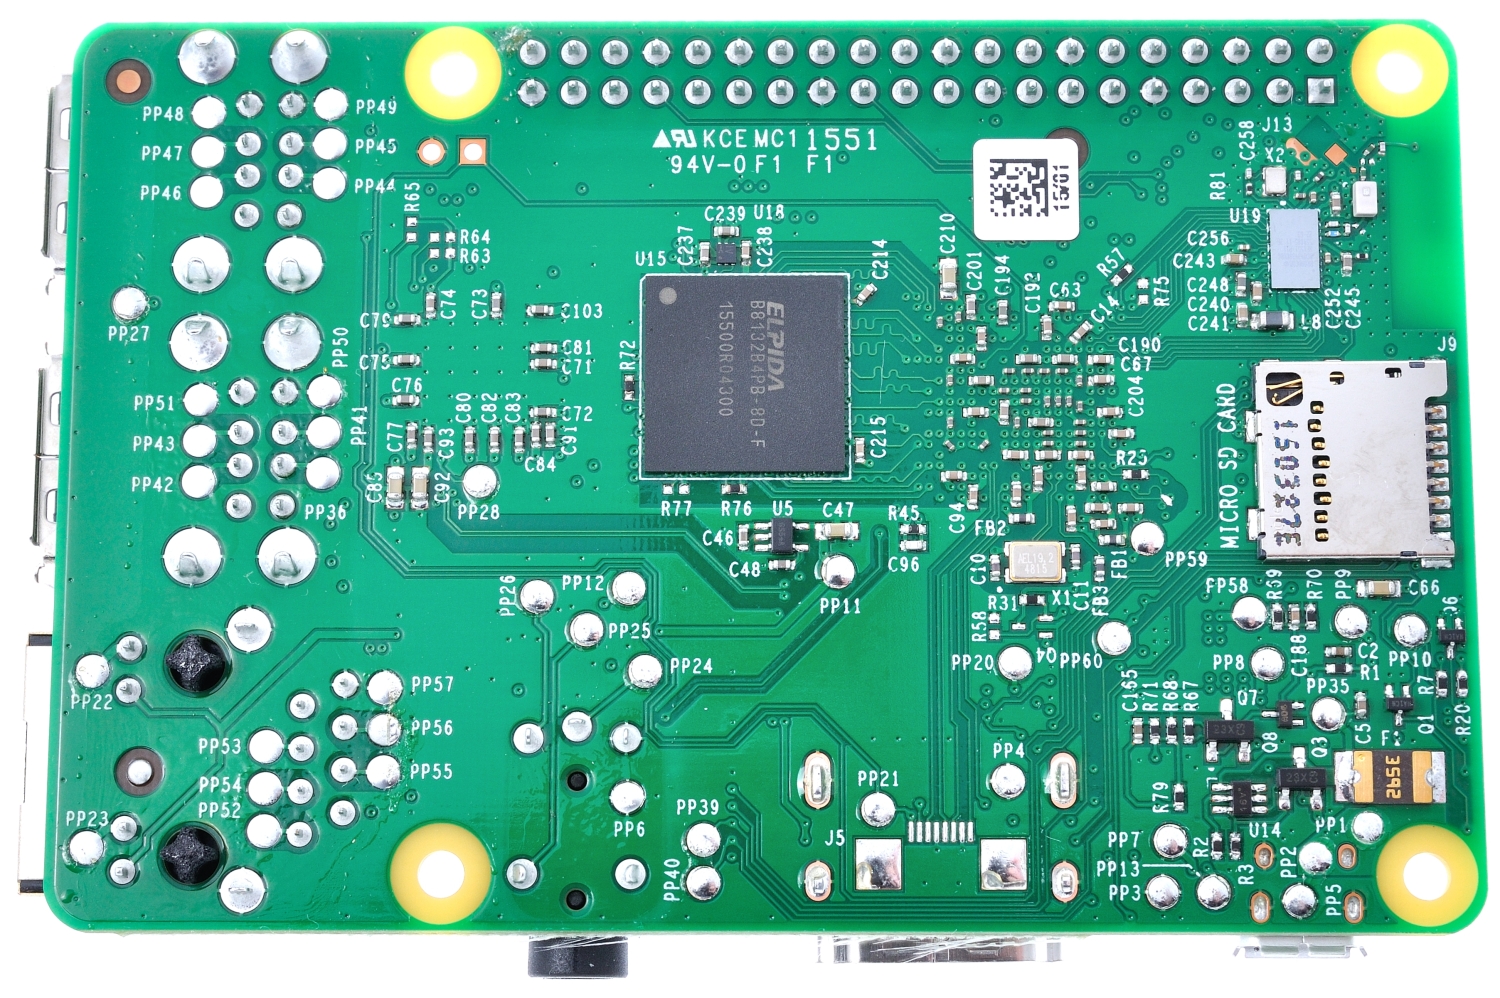 Raspberry Pi 3 model B launches today – 64-bit quad A53 1.2 GHz BCM2837 – RasPi.TV